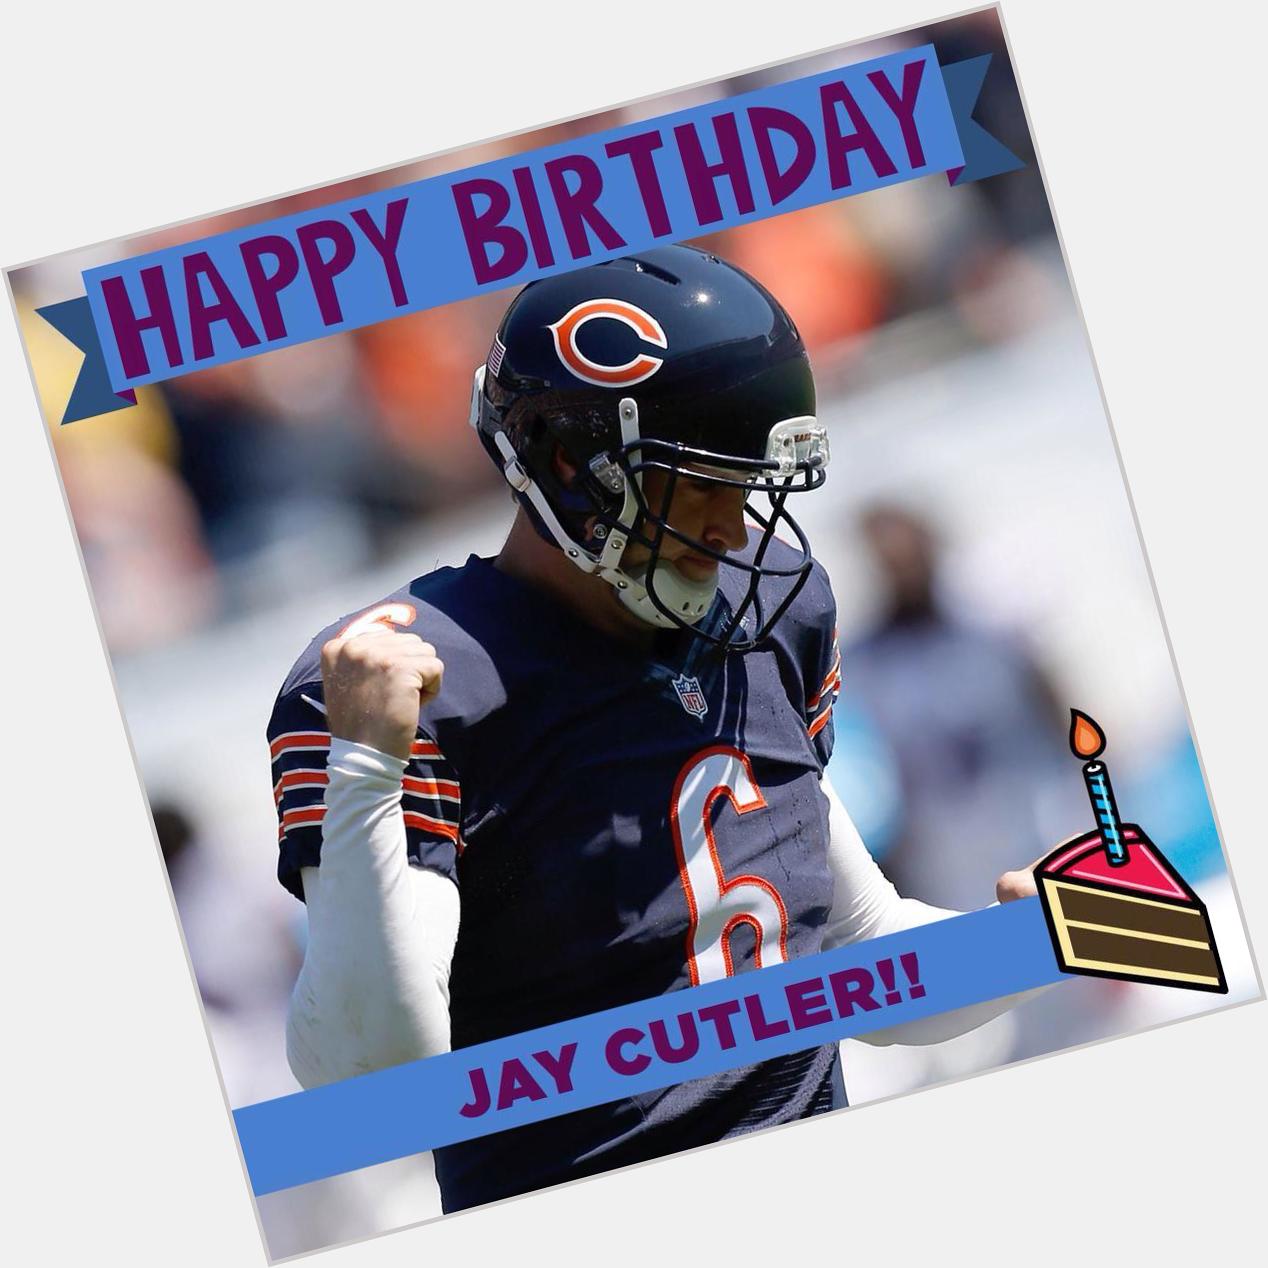 Happy Birthday to Jay Cutler! 